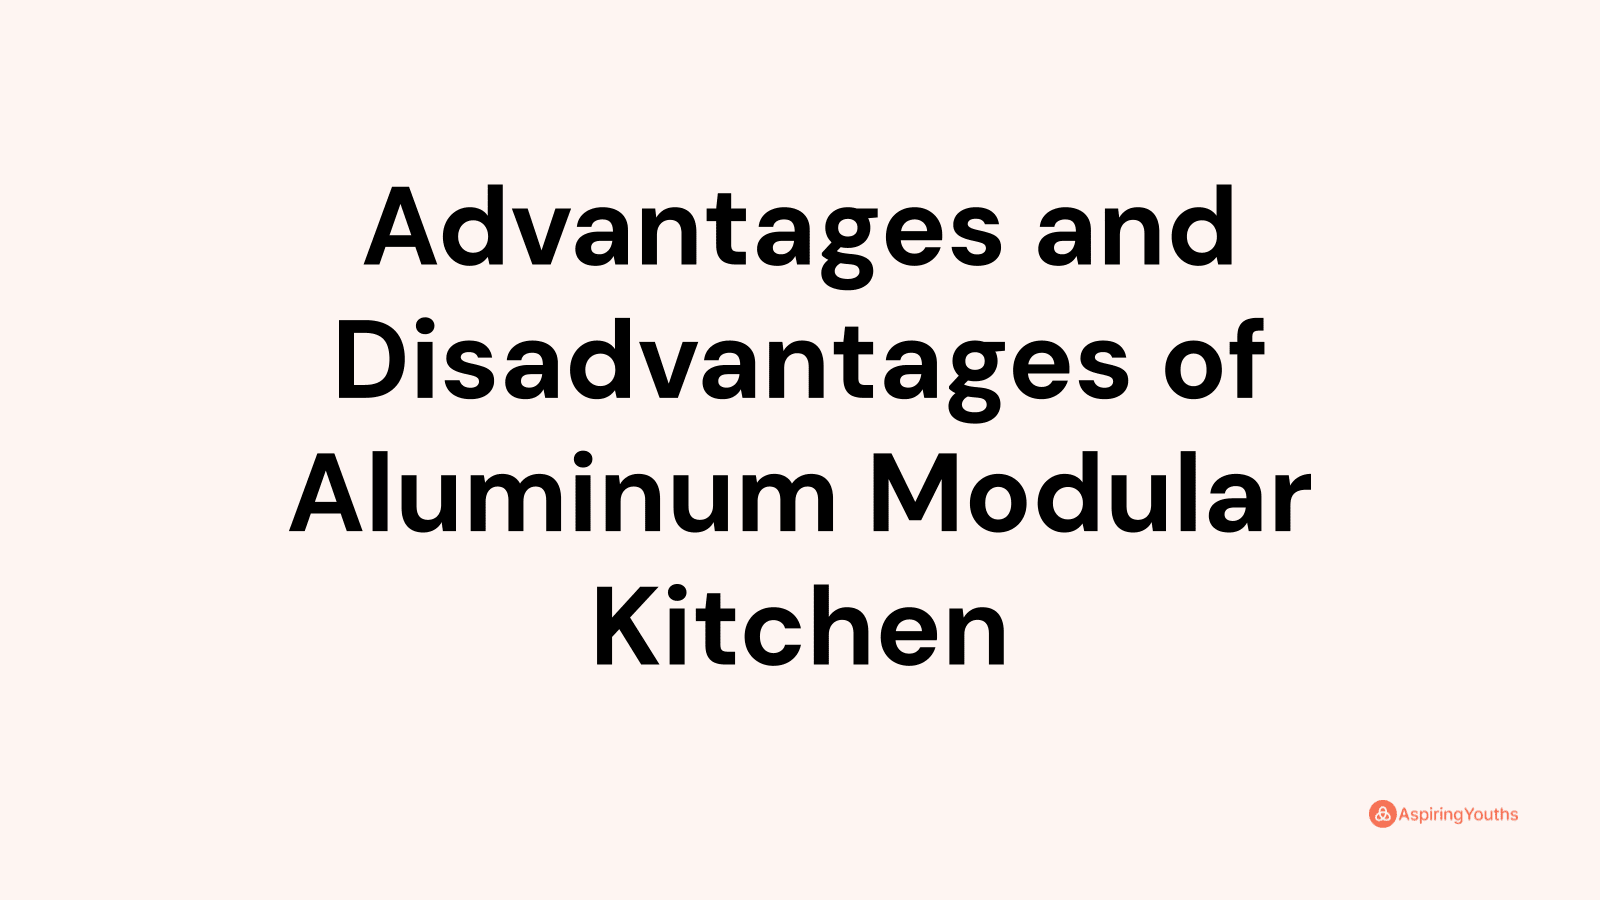 Advantages and disadvantages of Aluminum Modular Kitchen